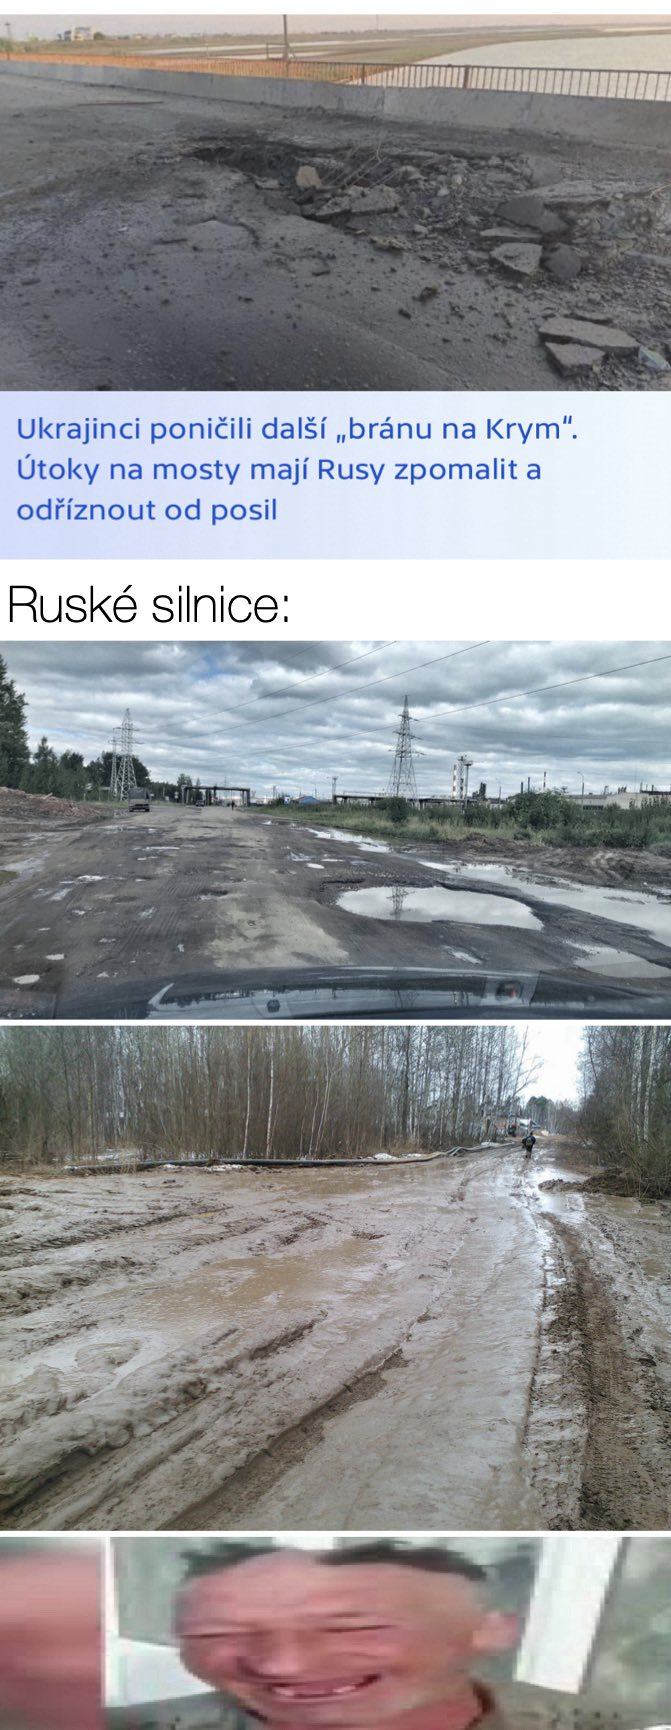 Obrázek ponicena ruska silnice